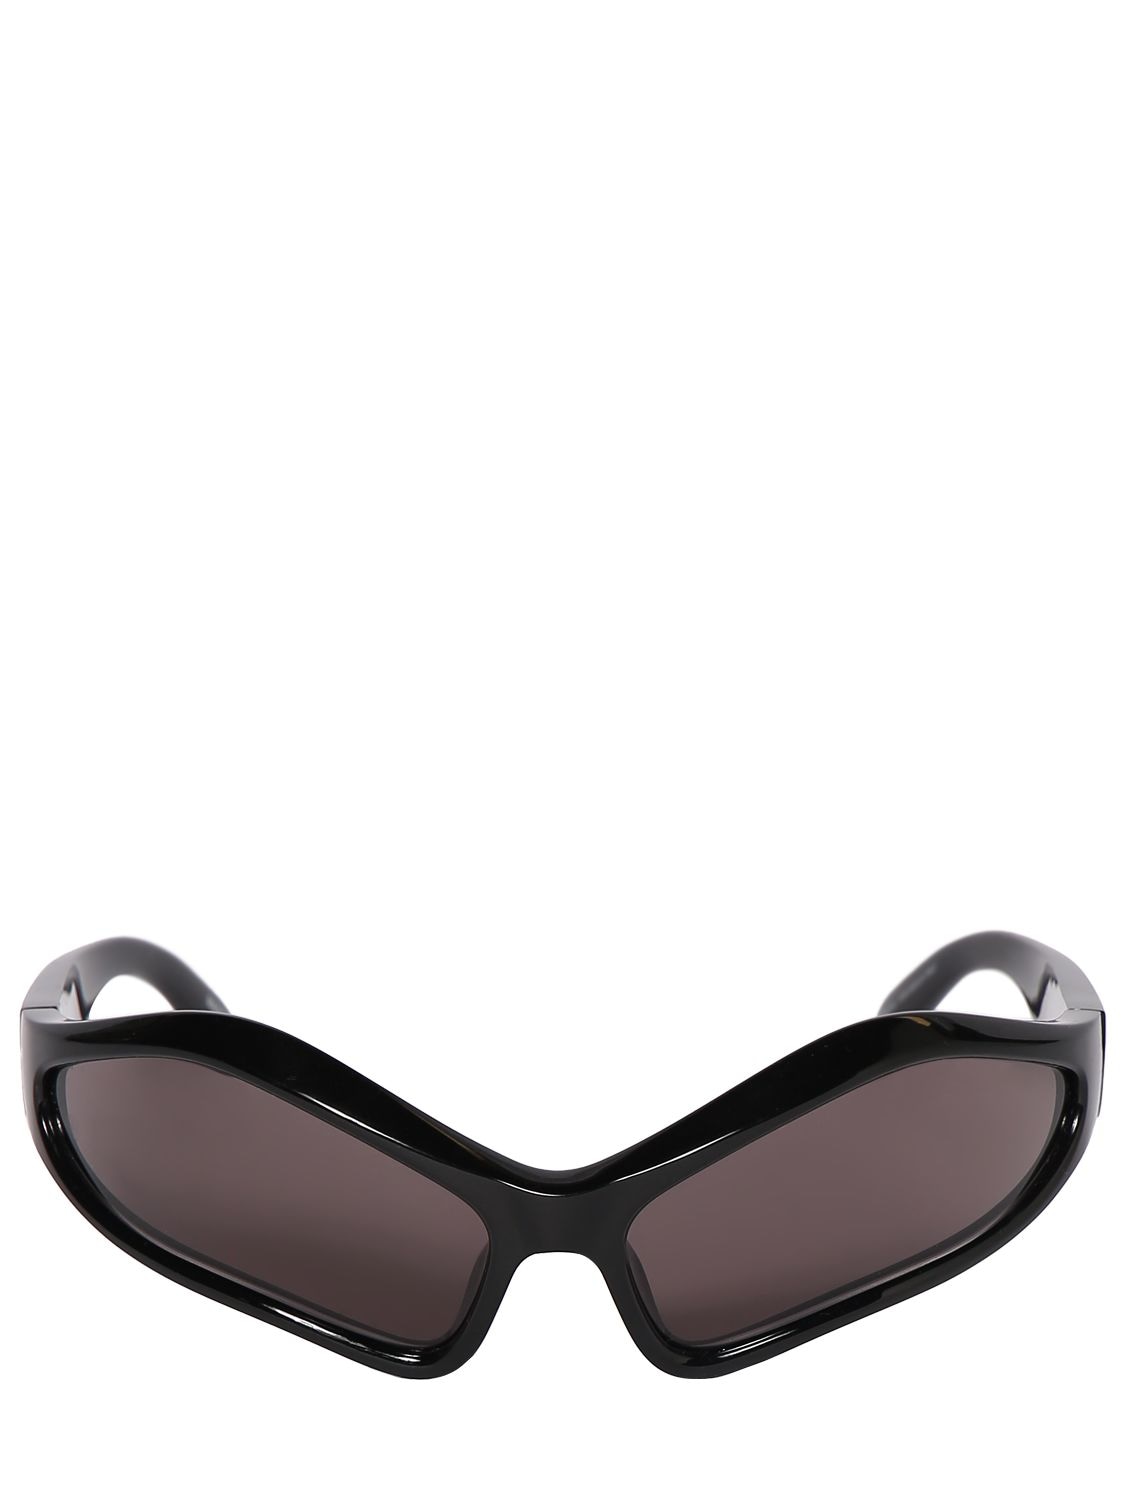 Image of 0314s Fennec Oval Acetate Sunglasses